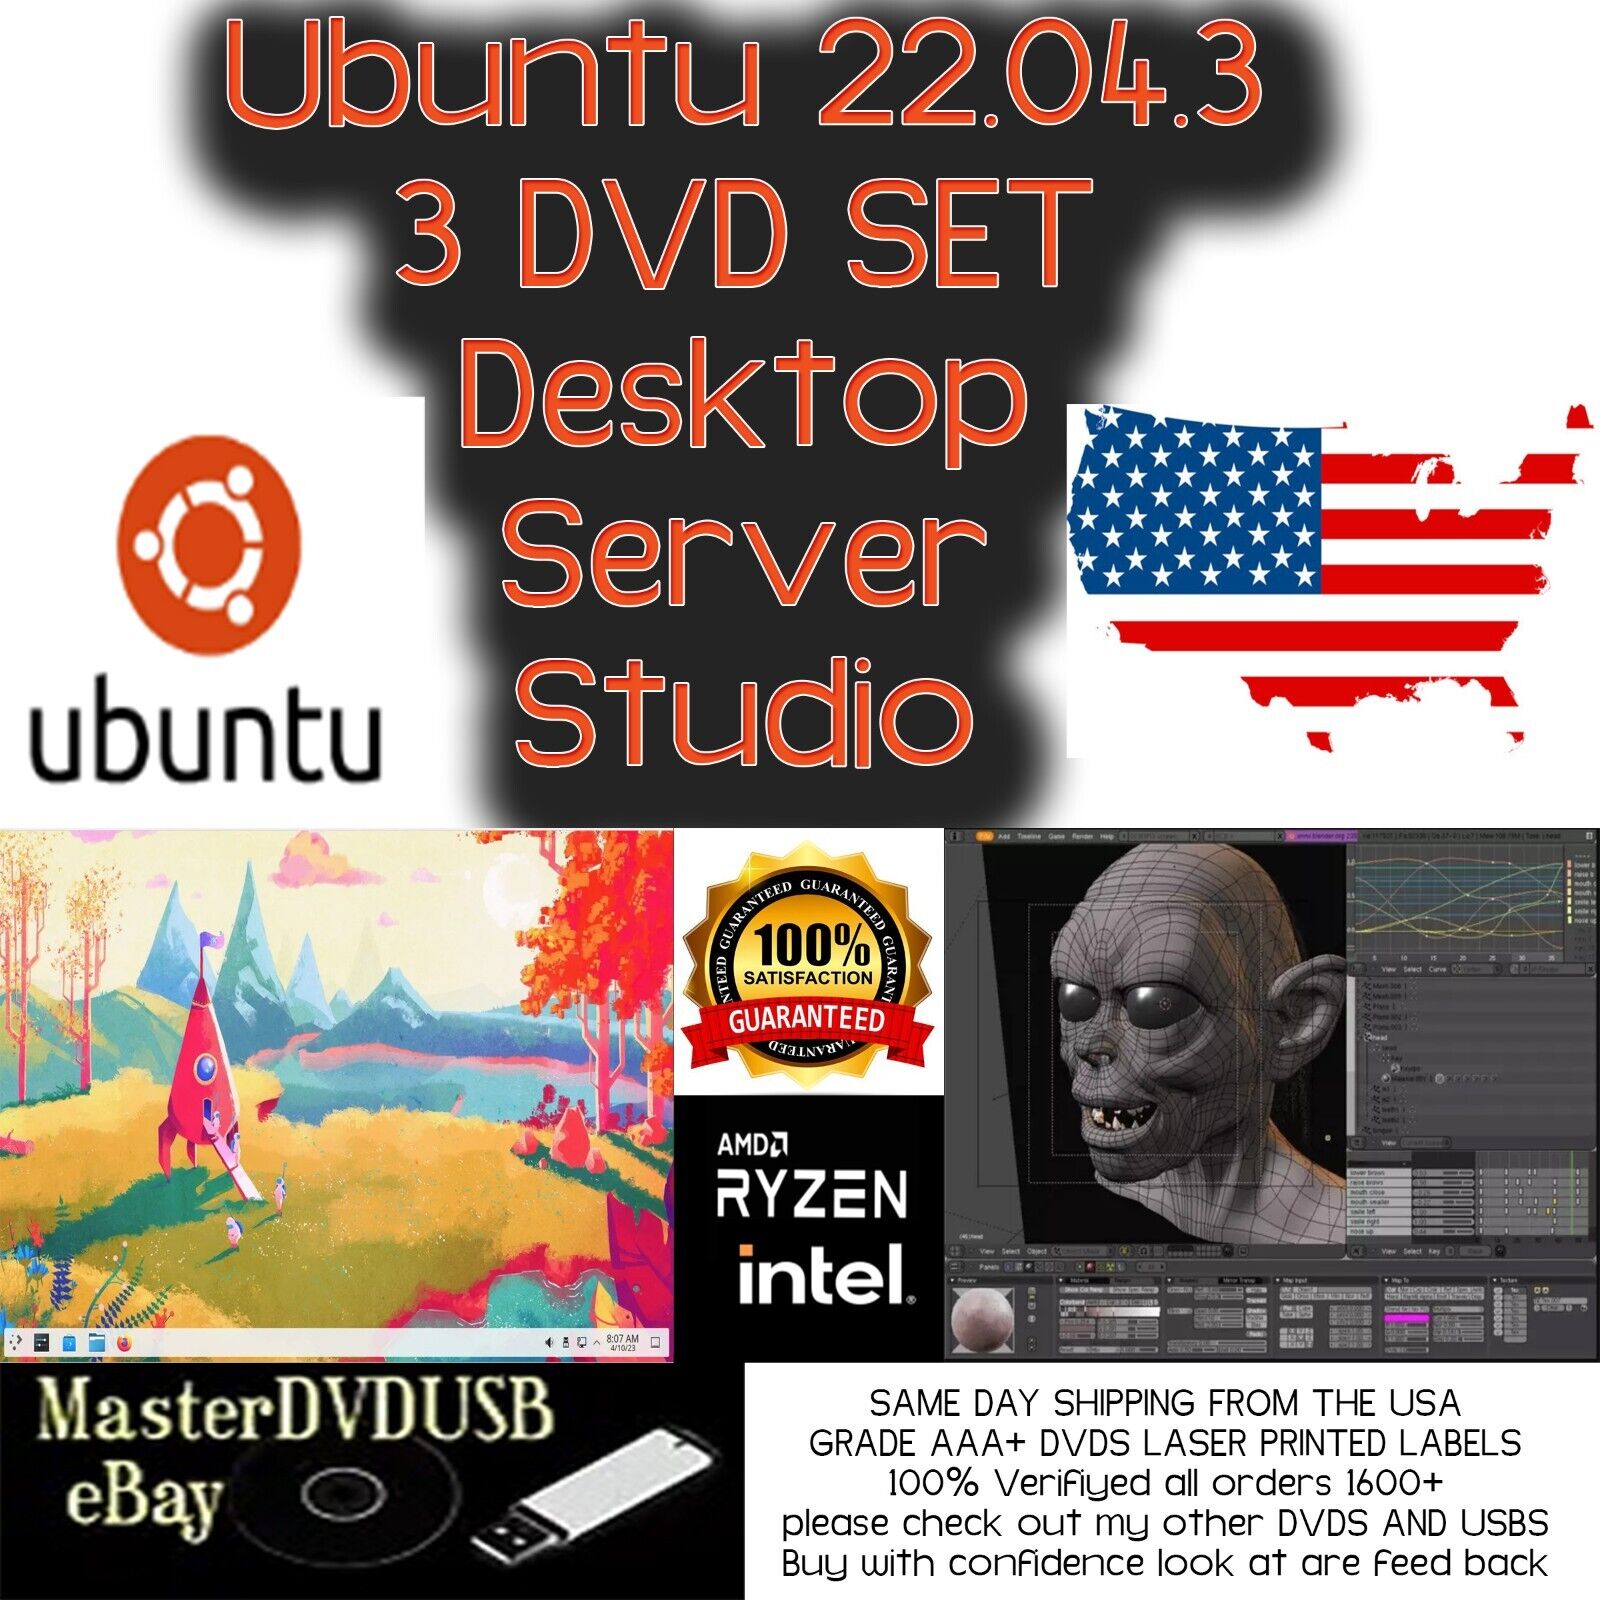 Ubuntu 22.04.3 Desktop, Server, and Studio DVD Set SAME DAY SHIPPING